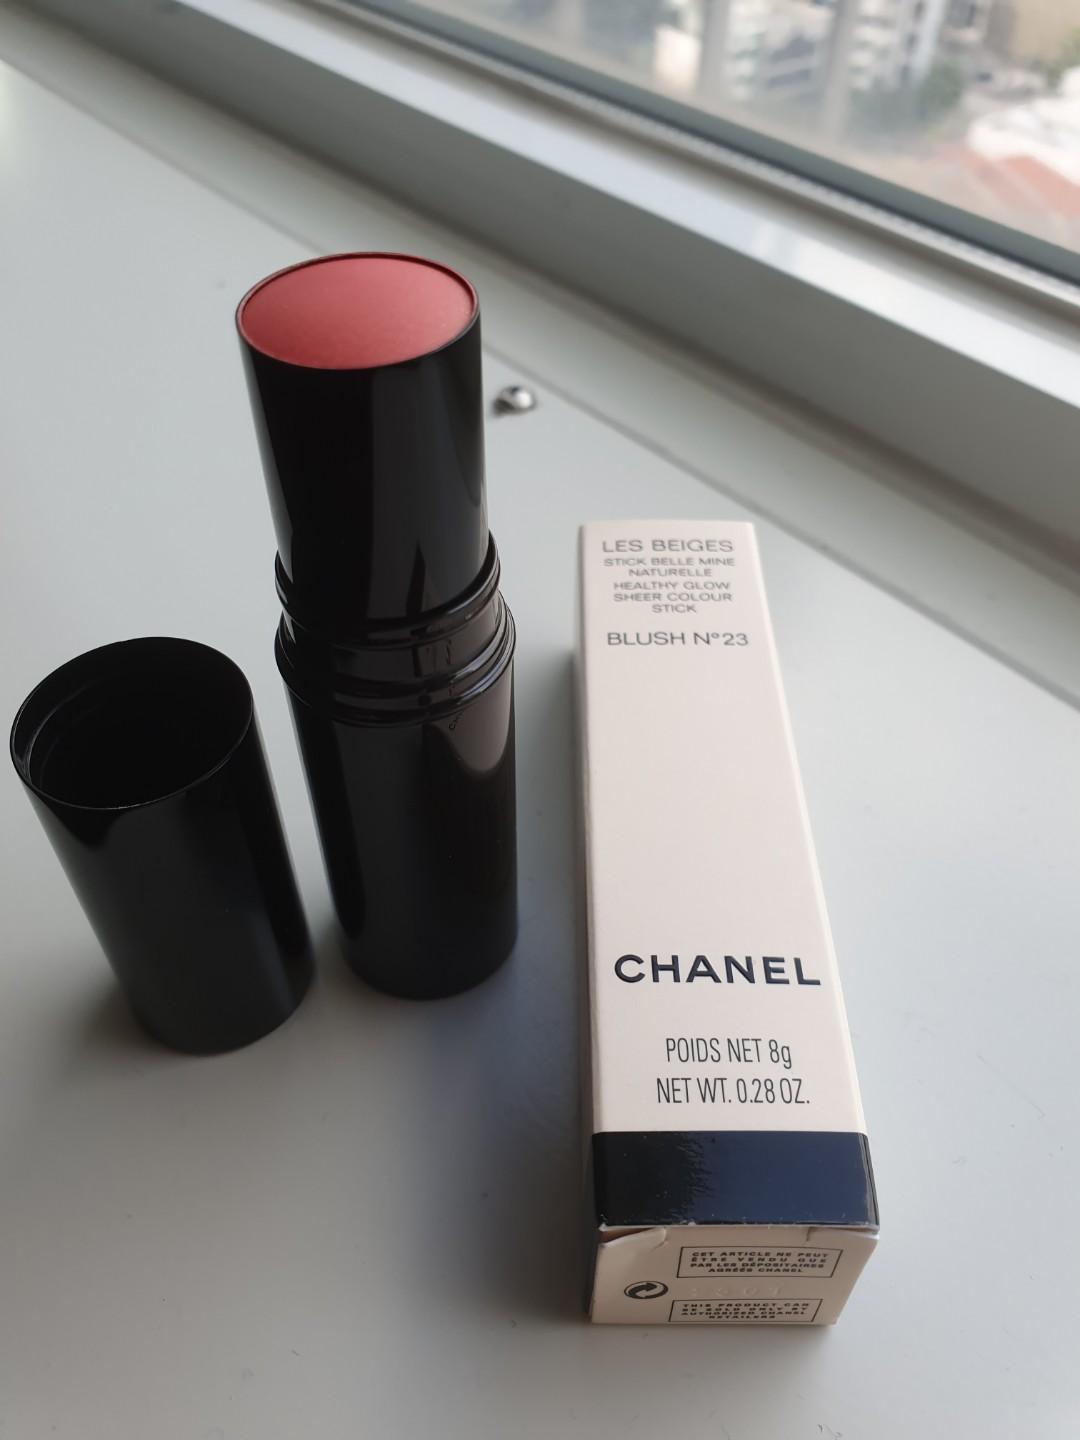 Chanel - Les Beiges Healthy Glow Sheer Colour Stick, Beauty